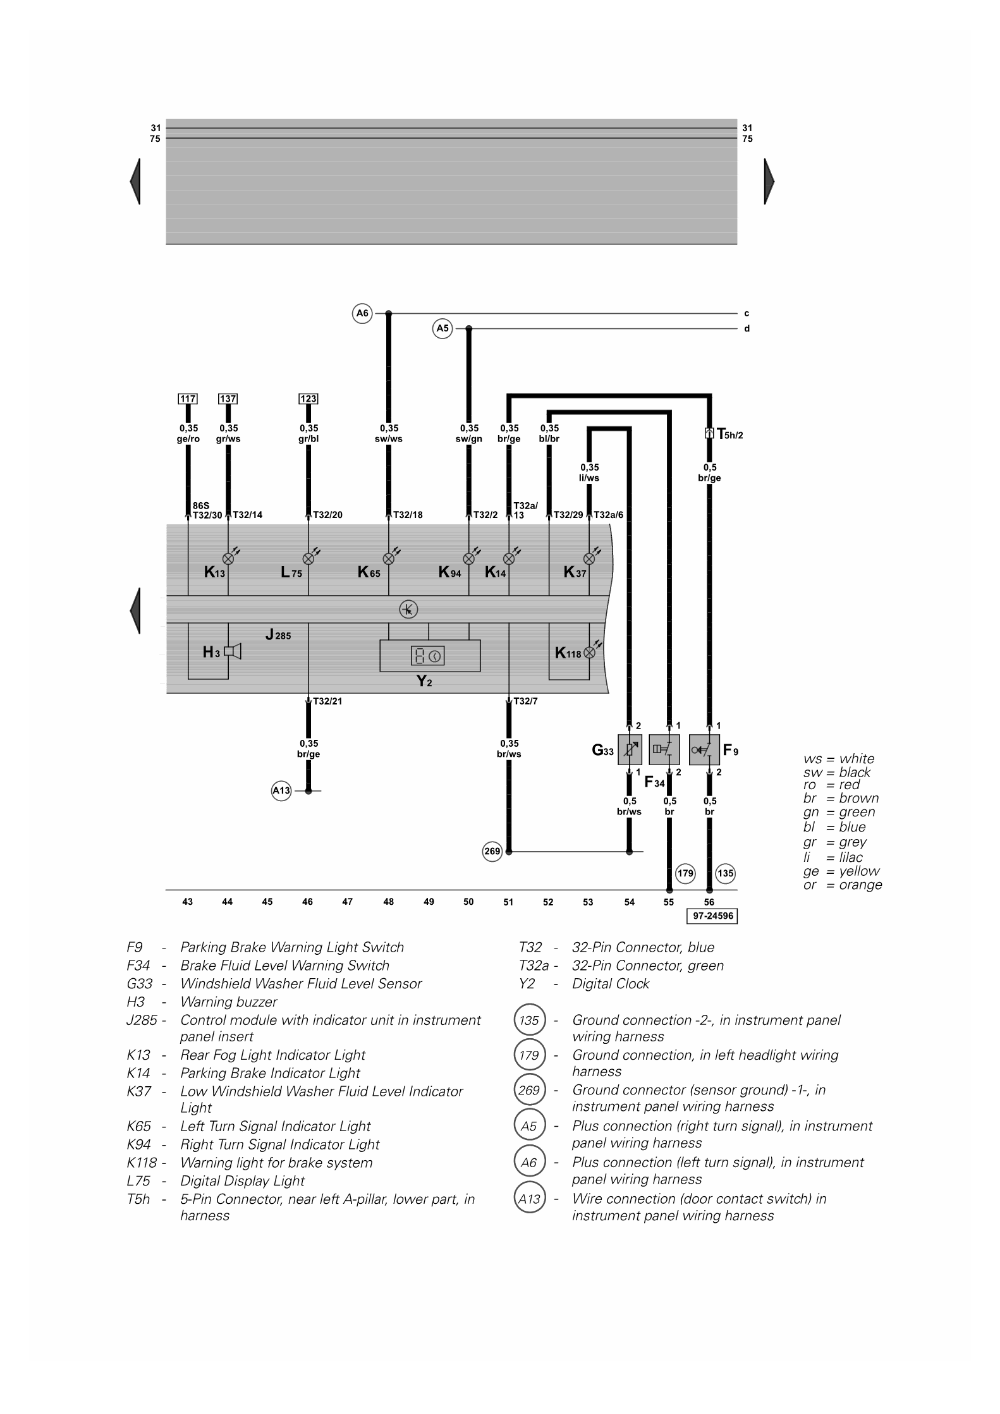 grote 44891 wiring diagram